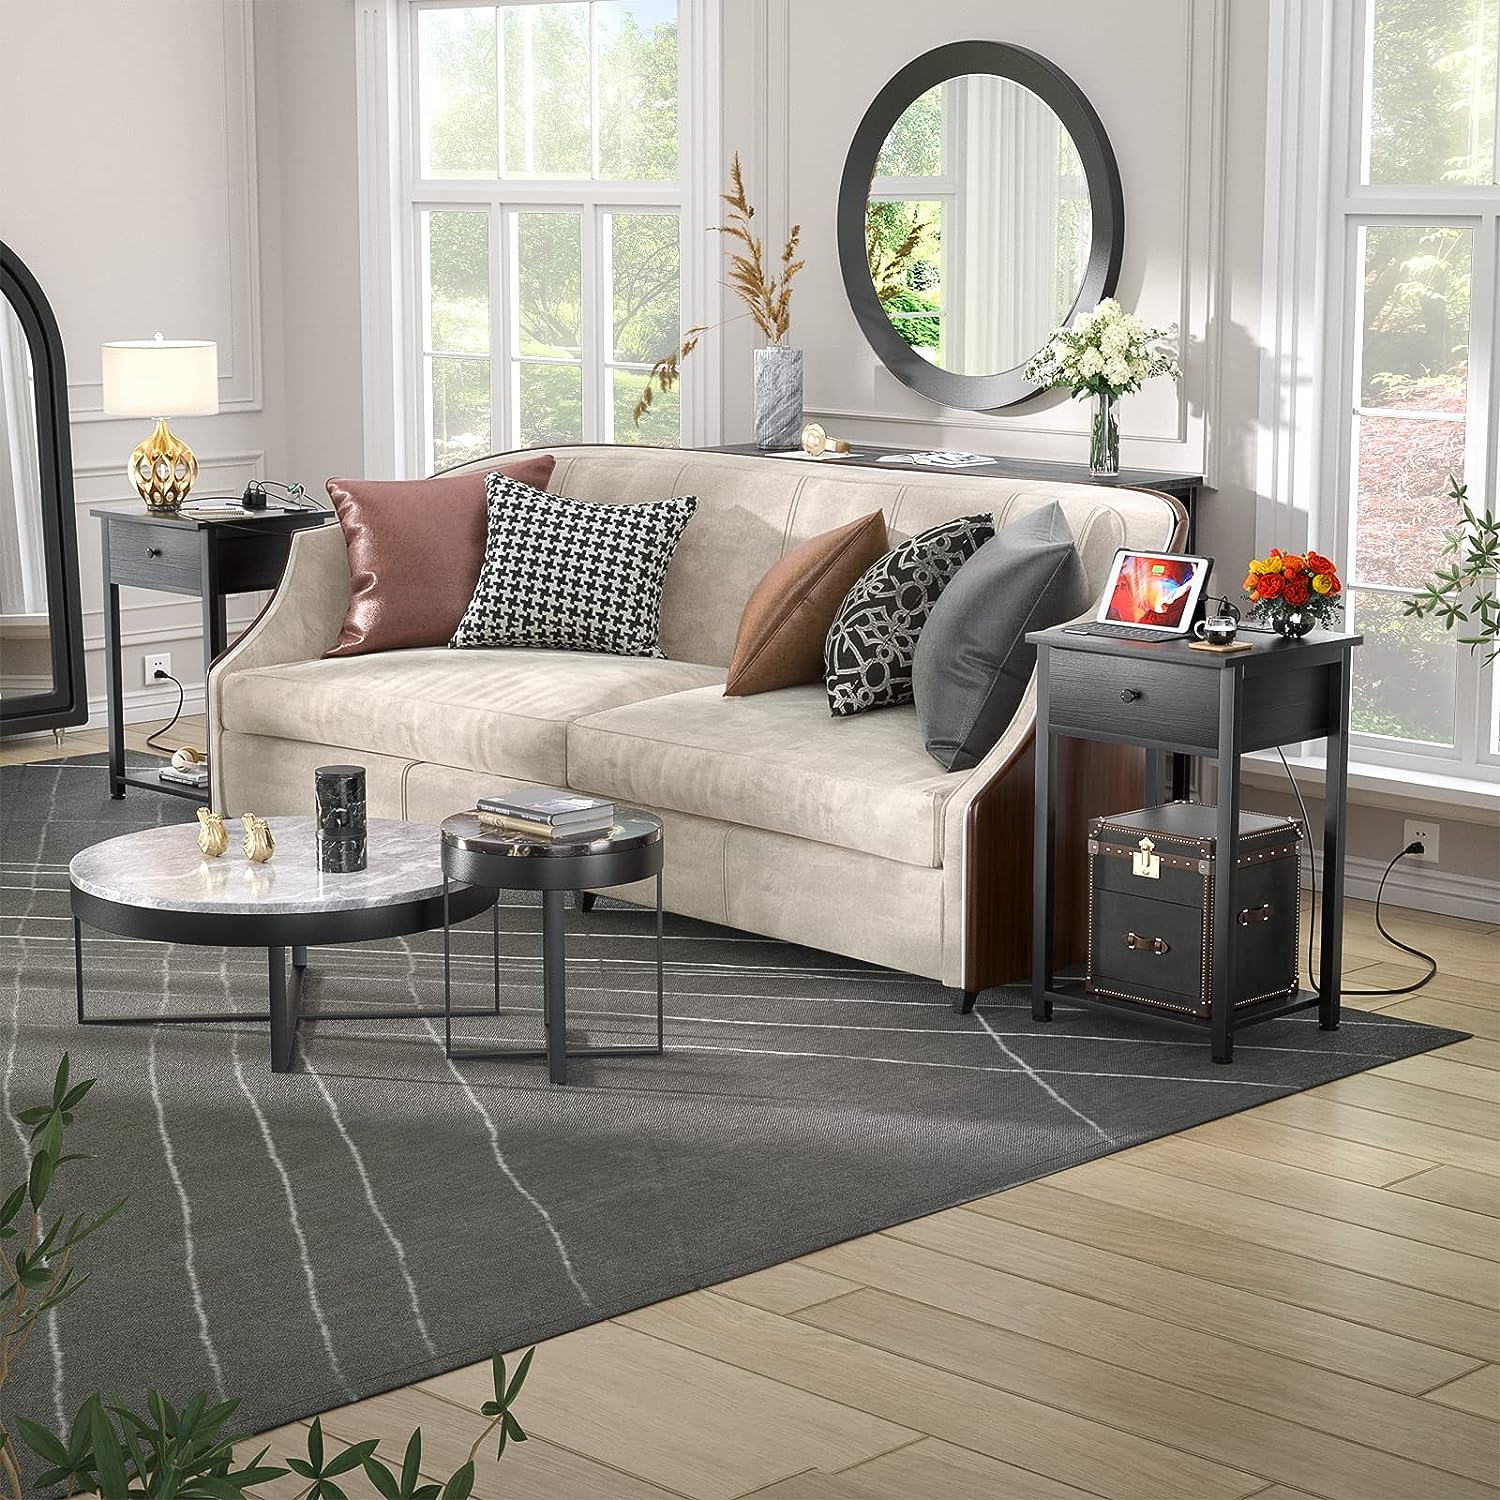 Mesa auxiliar negra para sofá - Comprar